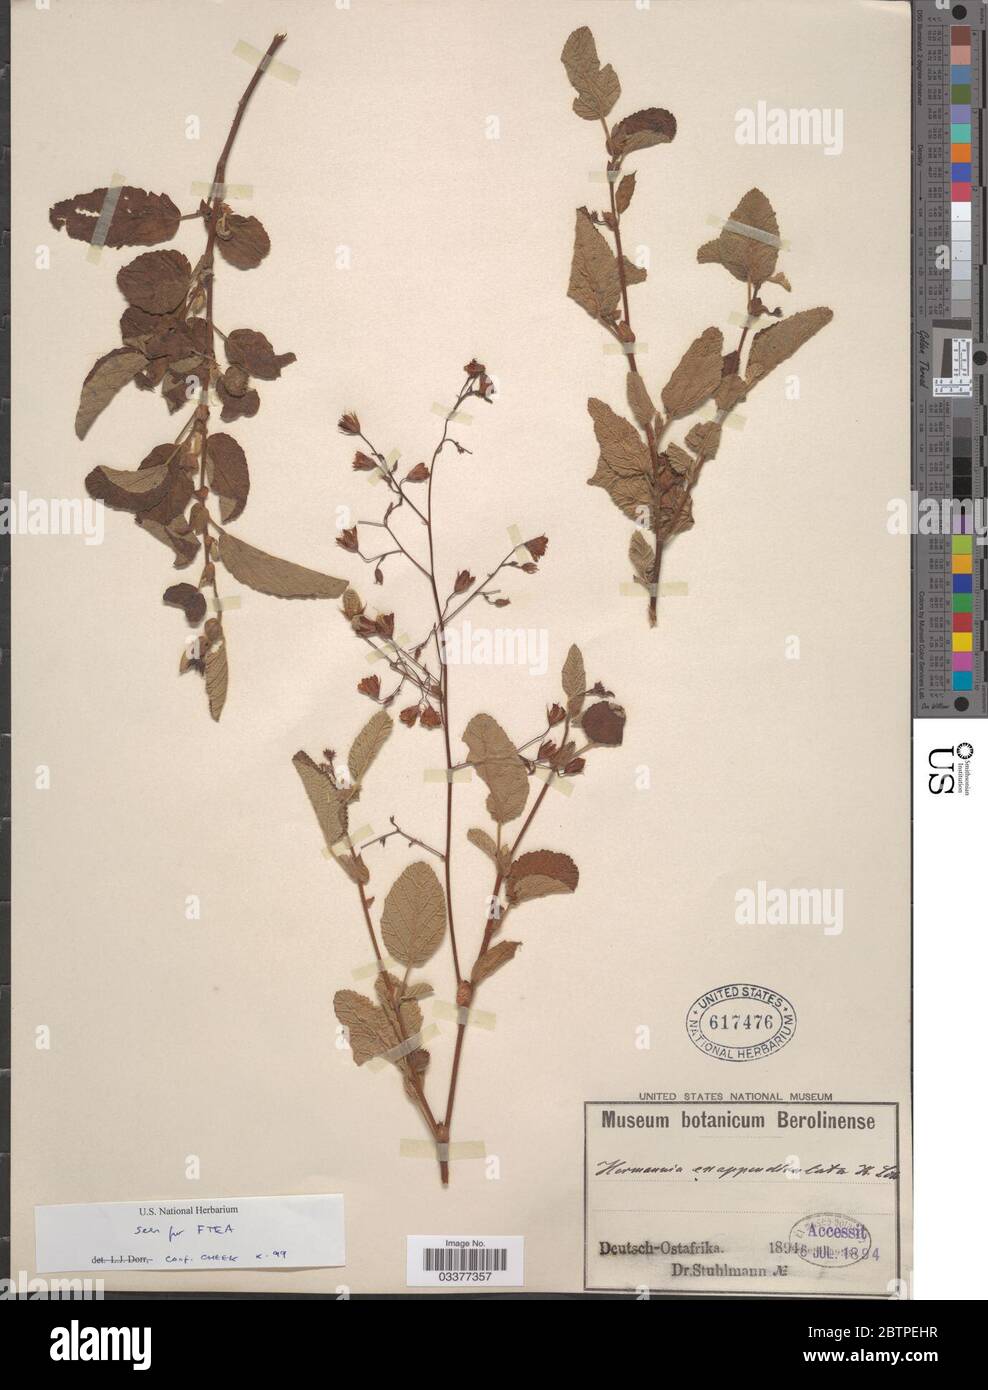 Hermannia exappendiculata Mast K Schum. Stock Photo